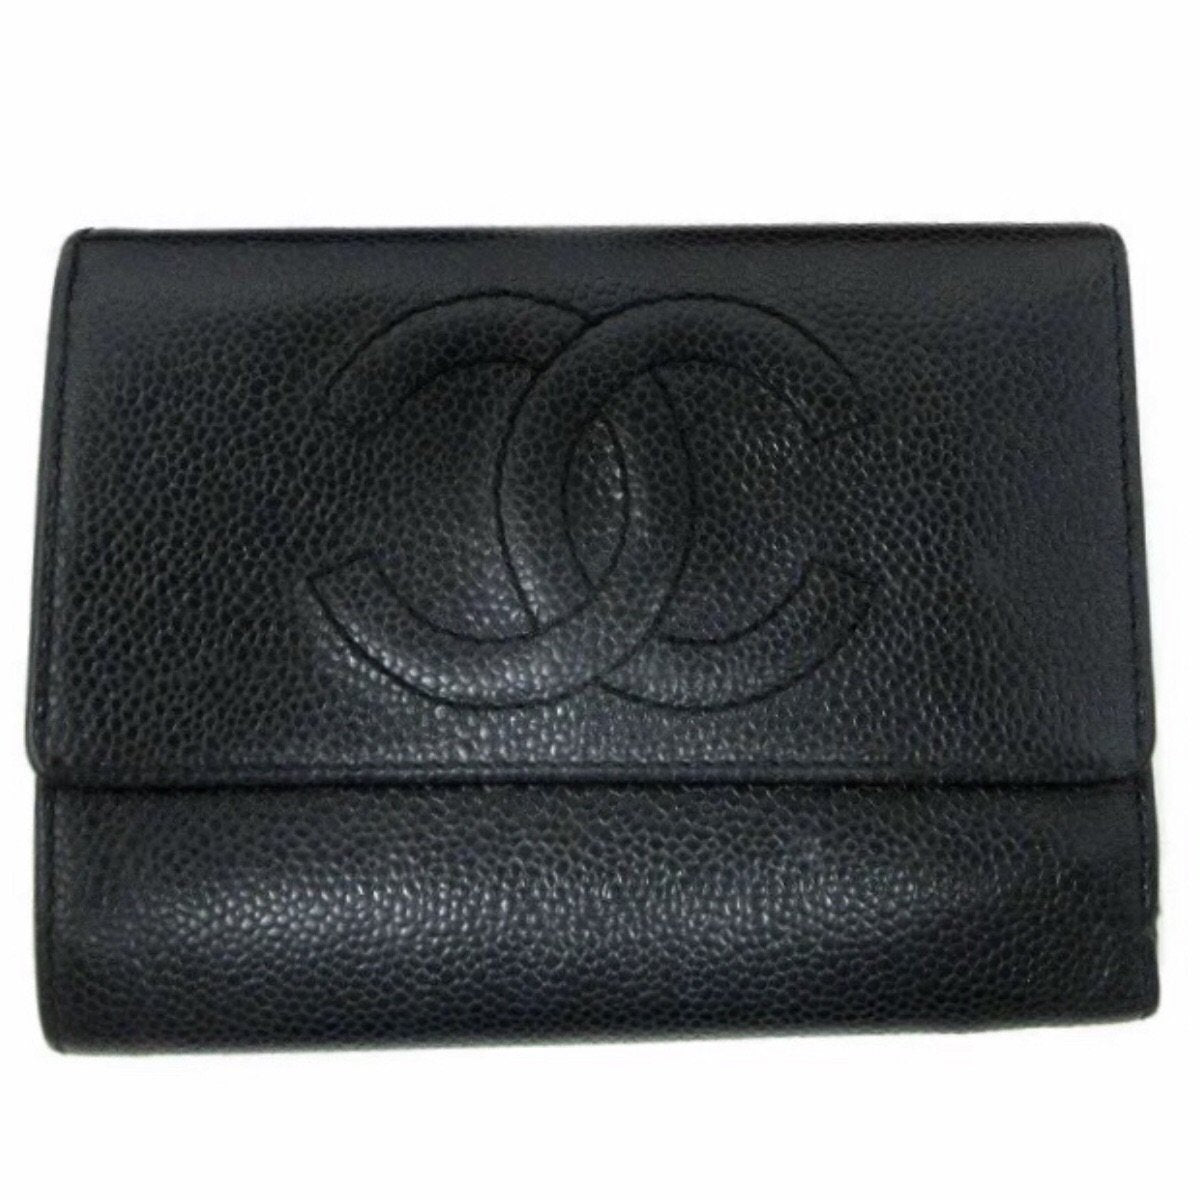 CHANEL, Bags, Chanel Interlocking Cc Continental Wallet